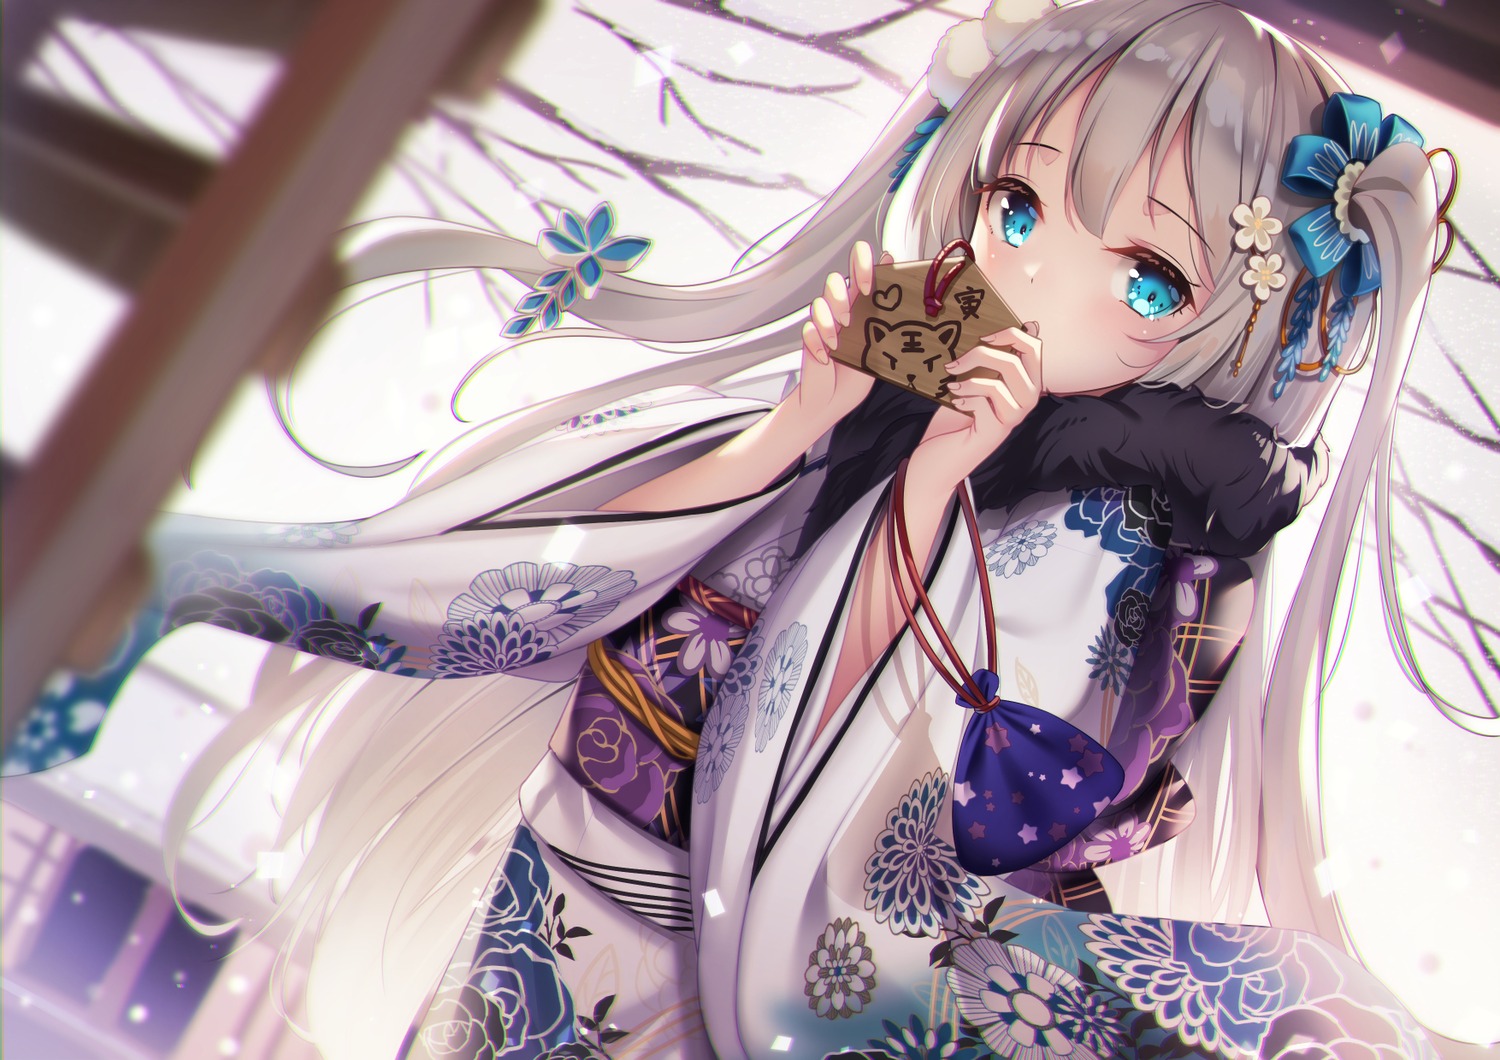 artist_revision kimono yan_(nicknikg)